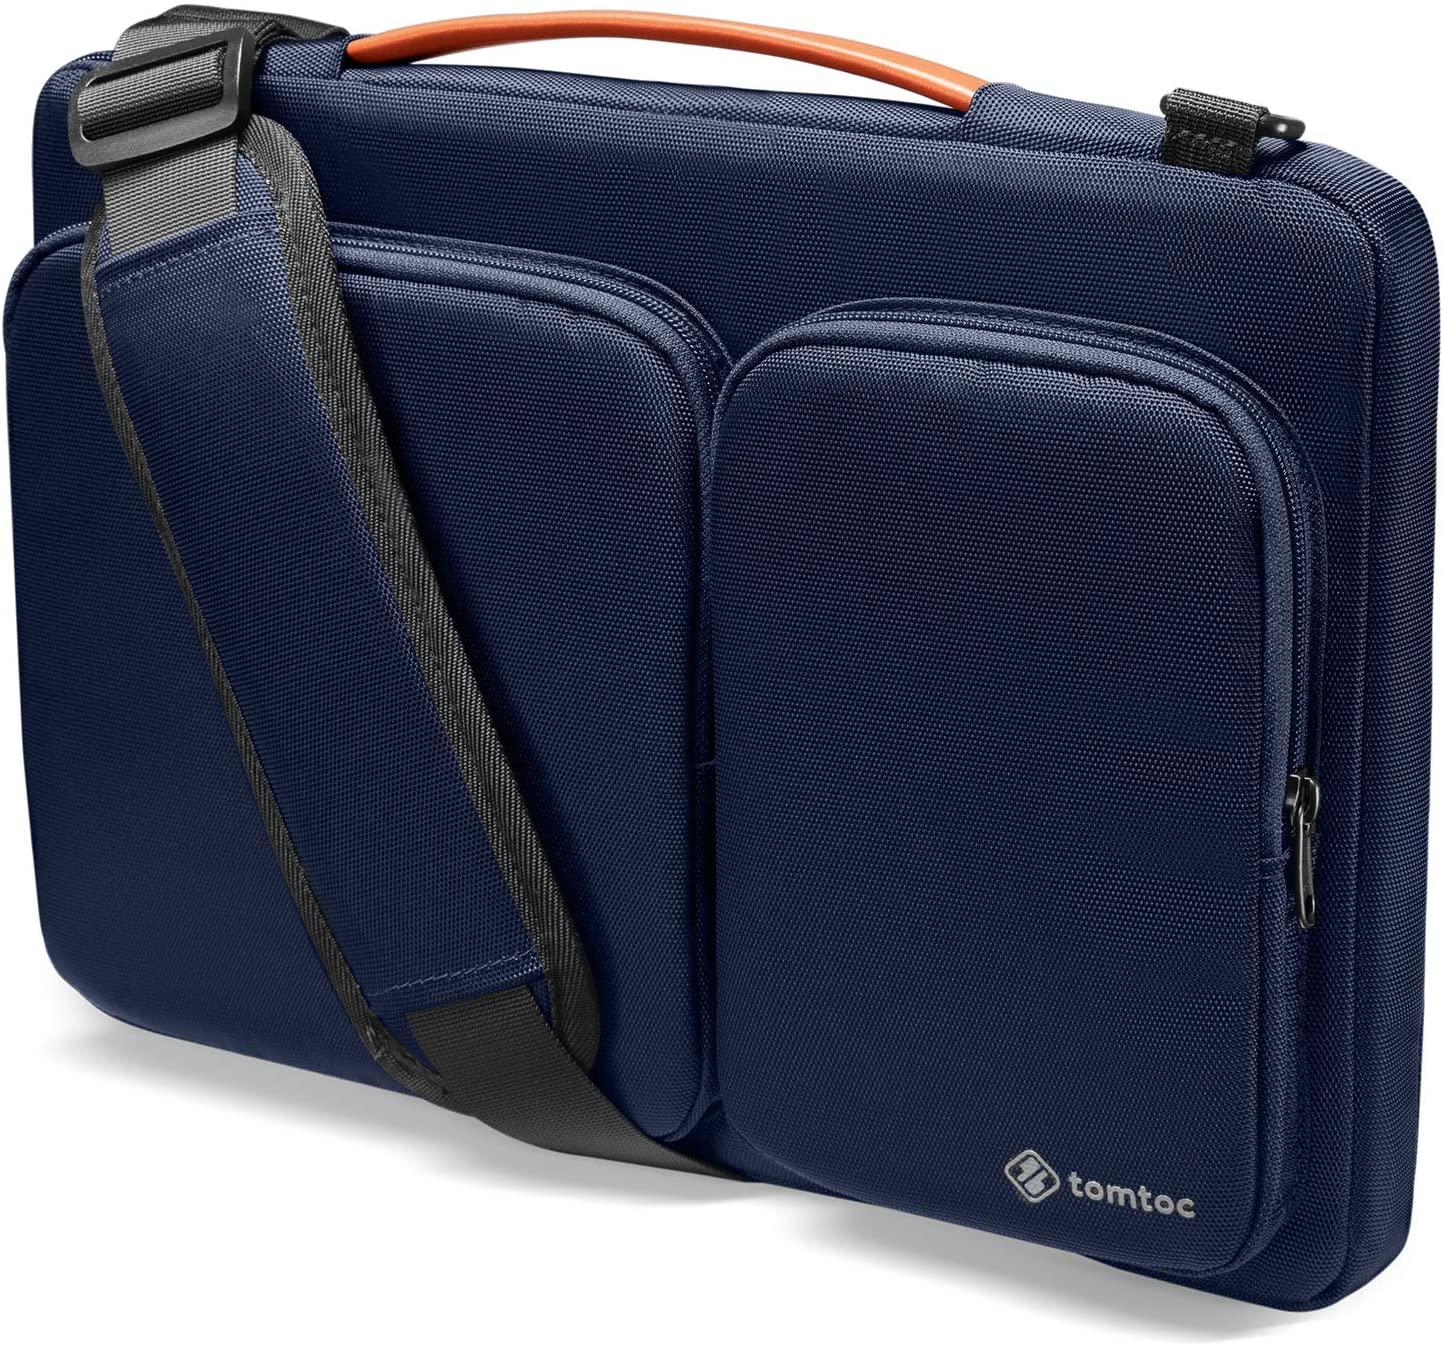 Tomtoc 360 protective laptop bag 